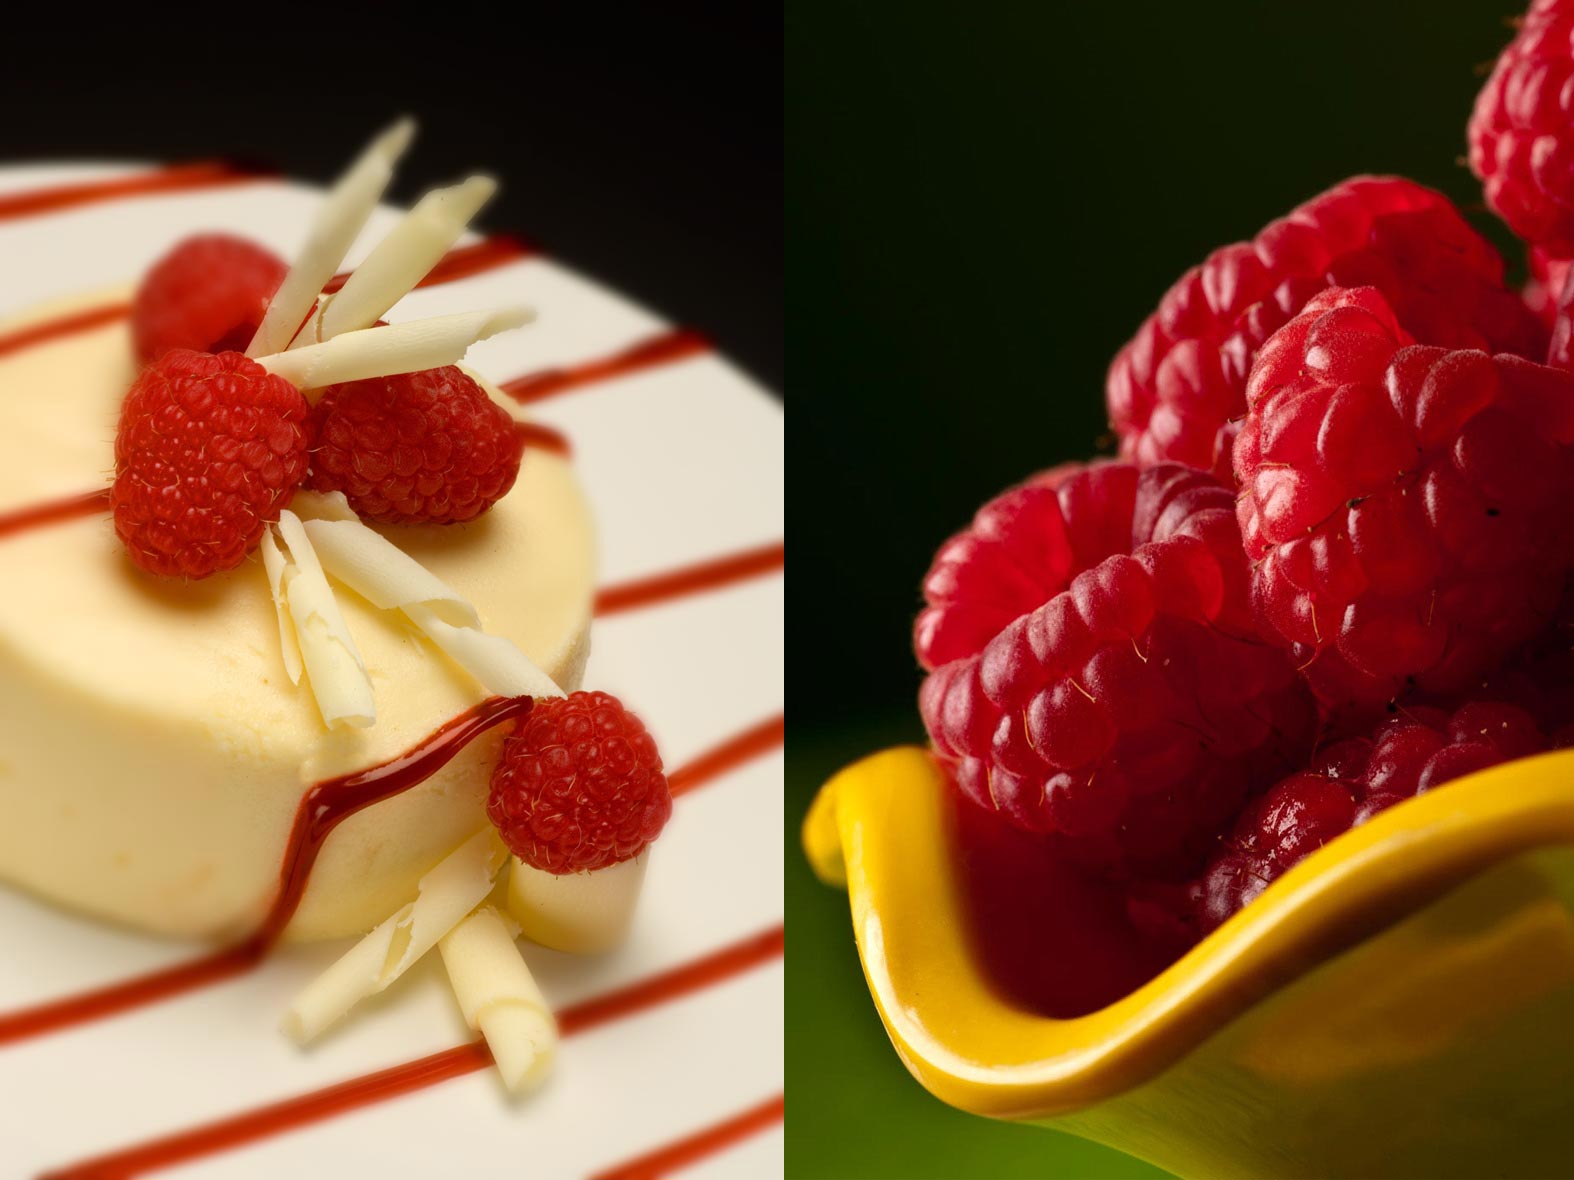   Dessert Photography | Raspberry Cheesecake